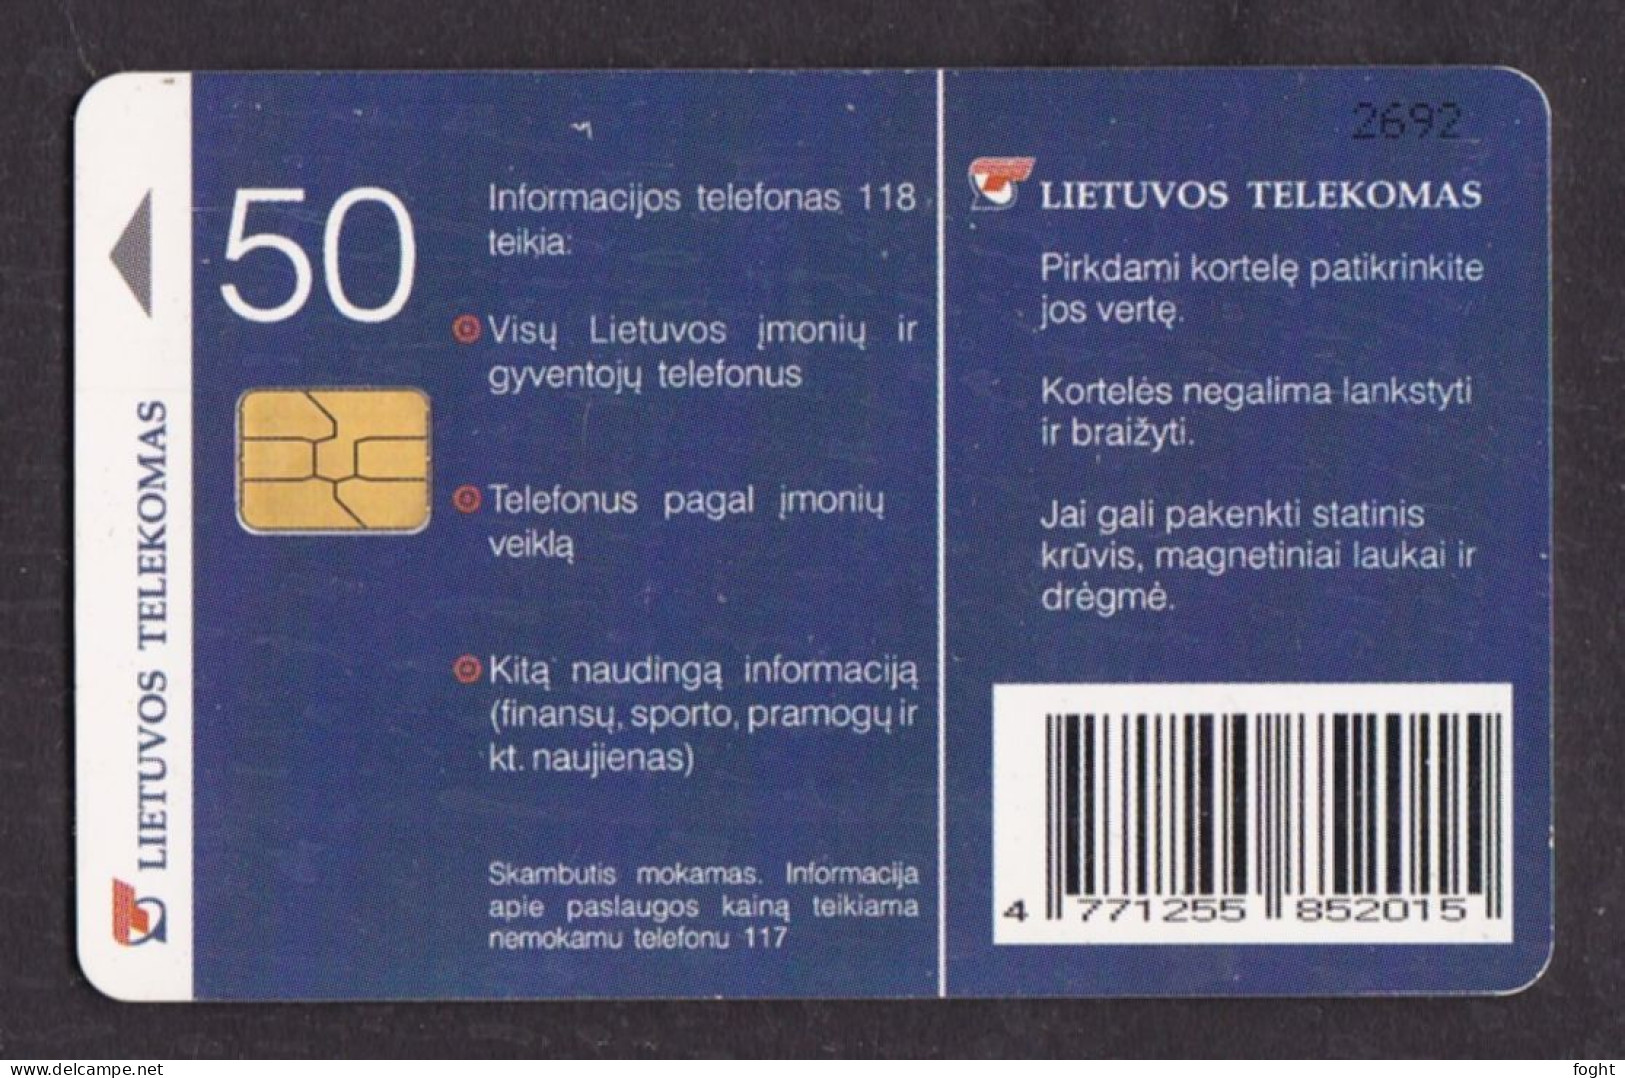 2001 Lietuvos Telekomas Chip Card 118 Information On Telephone 50 Units,Col:LT-LTV-C064 - Lituania